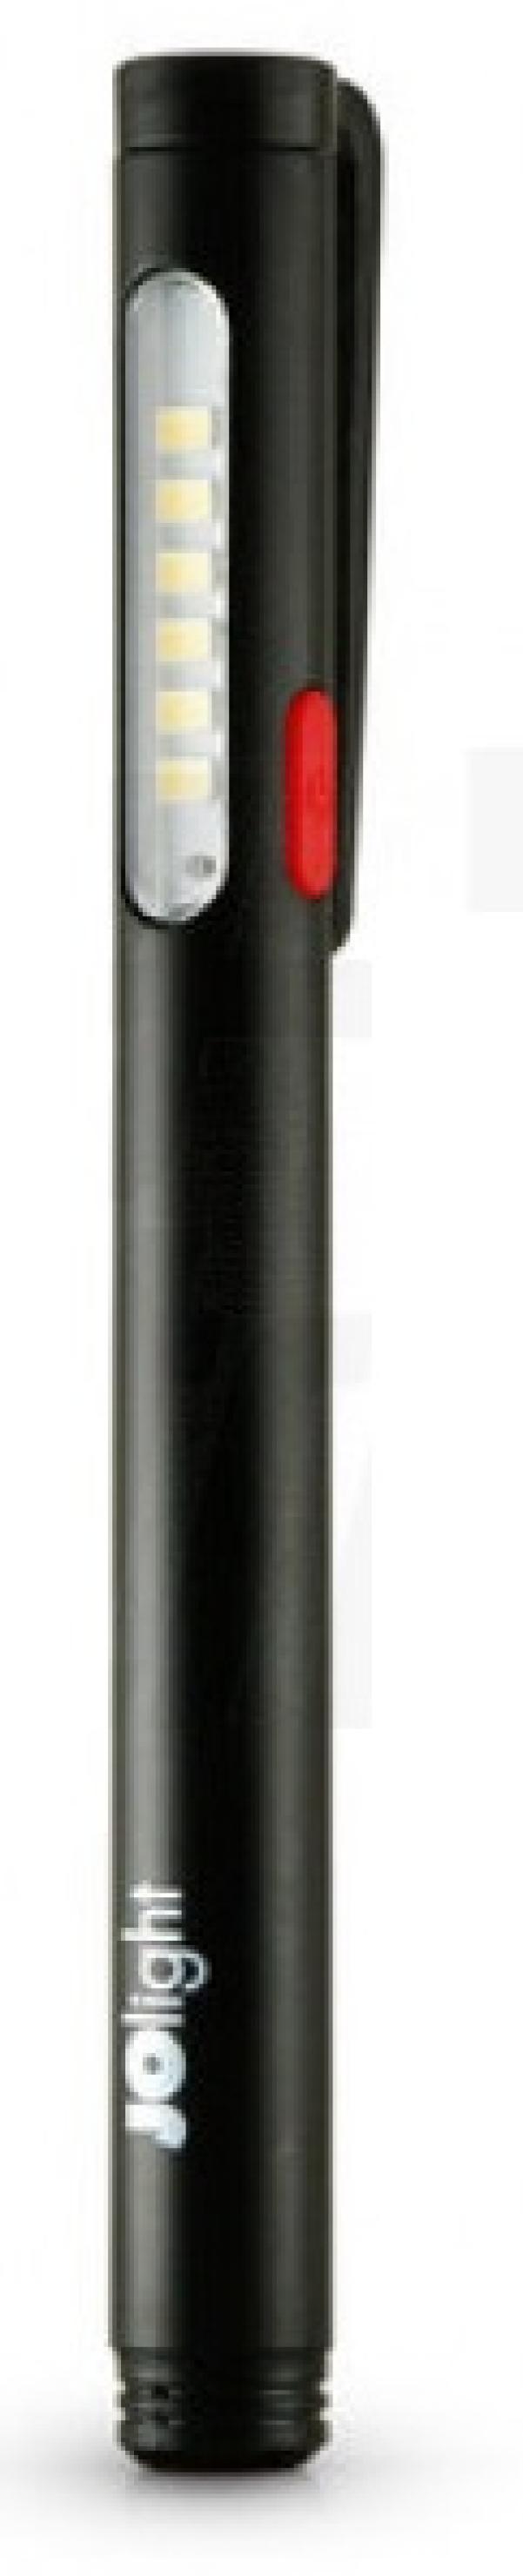 alpha elettronica alpha elettronica torcia a led formato penna a batteria 1,5w serie stilo jo464pw